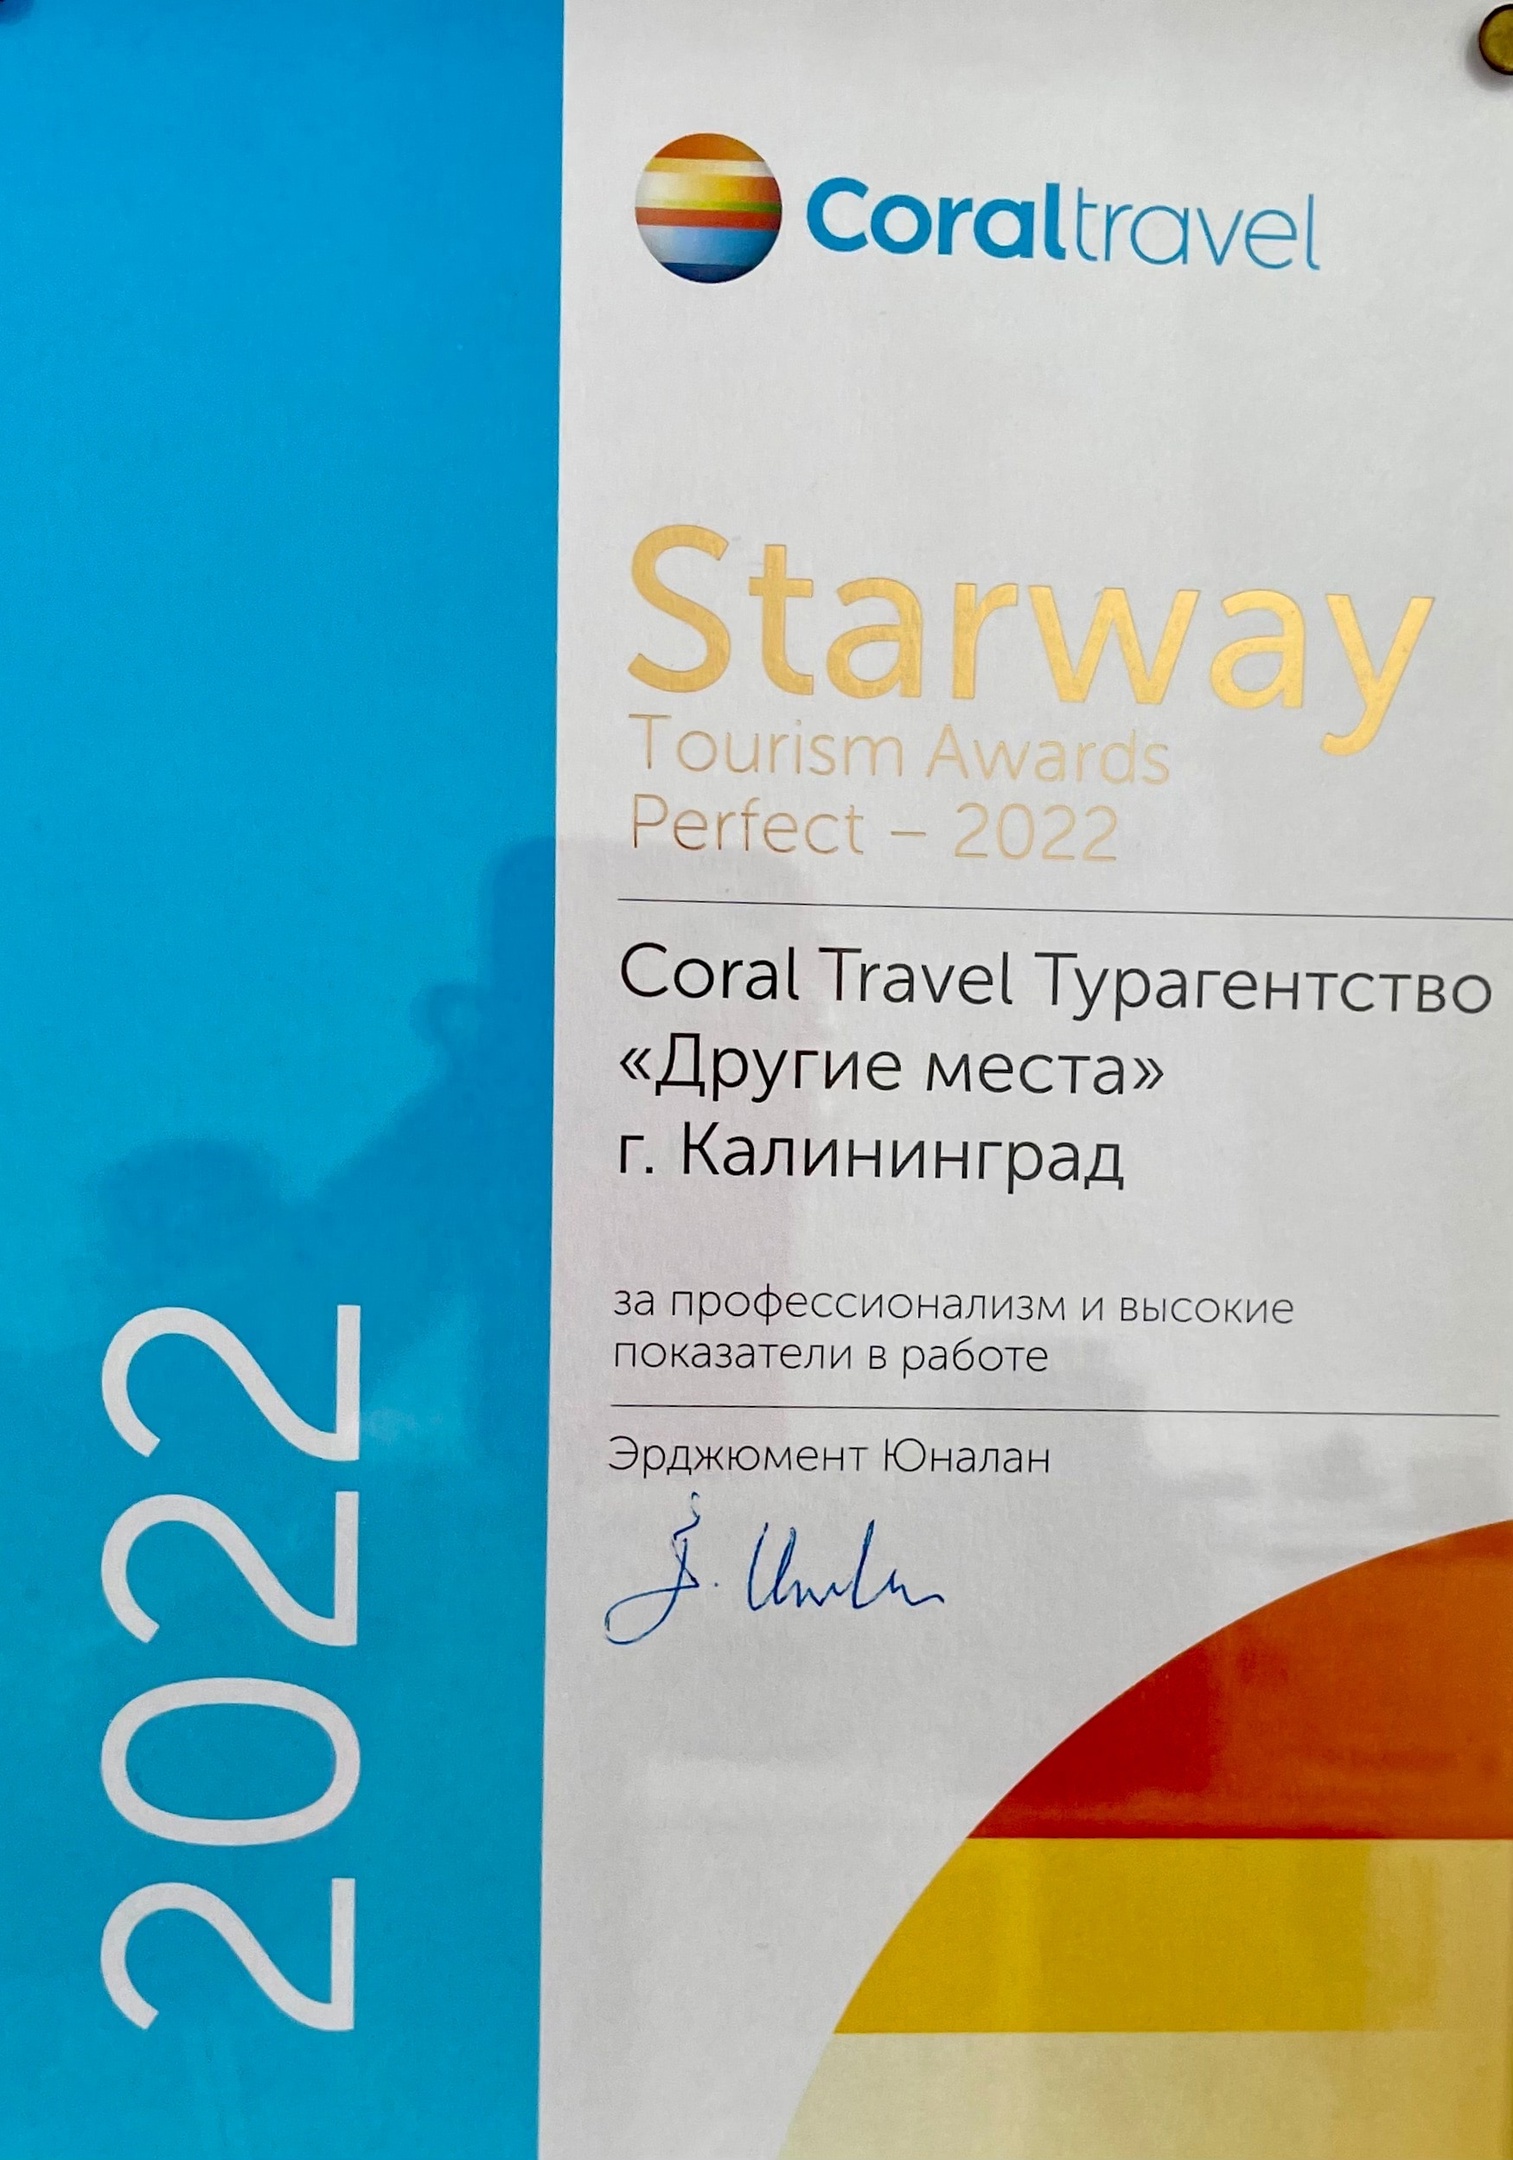 Сертификат "Coral2022"